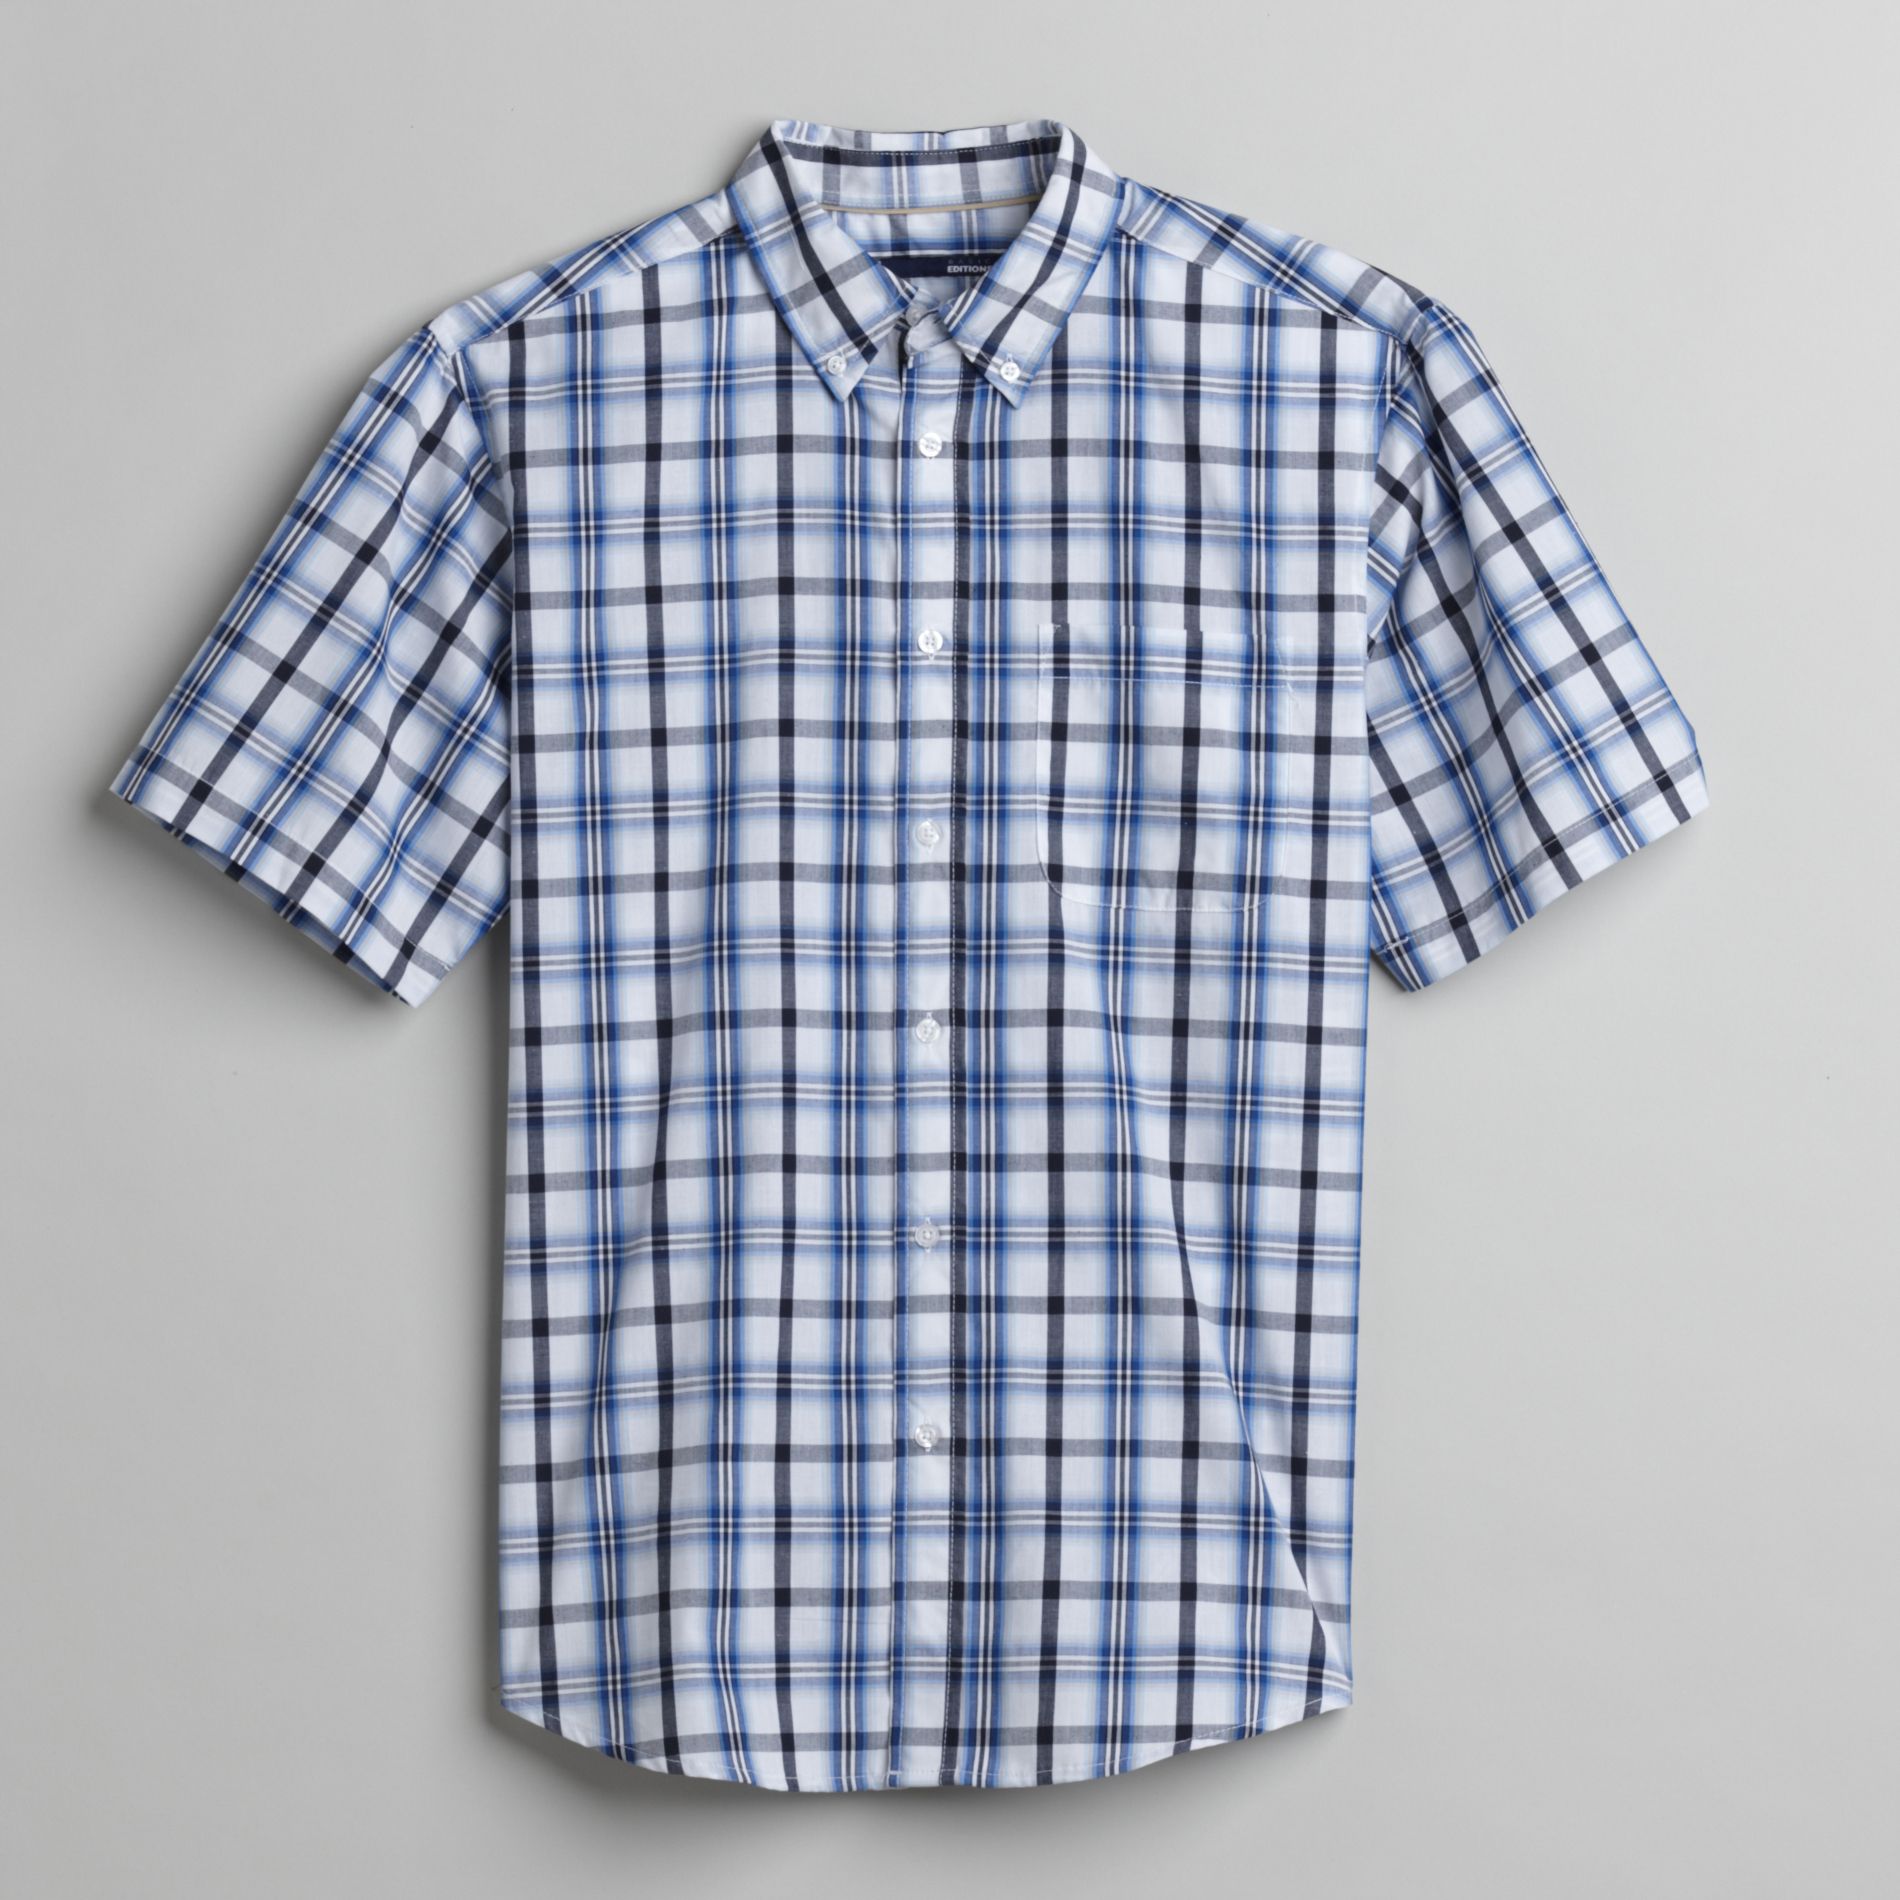 Basic Editions Men's Easy Care Short Sleeve Plaid Shirt